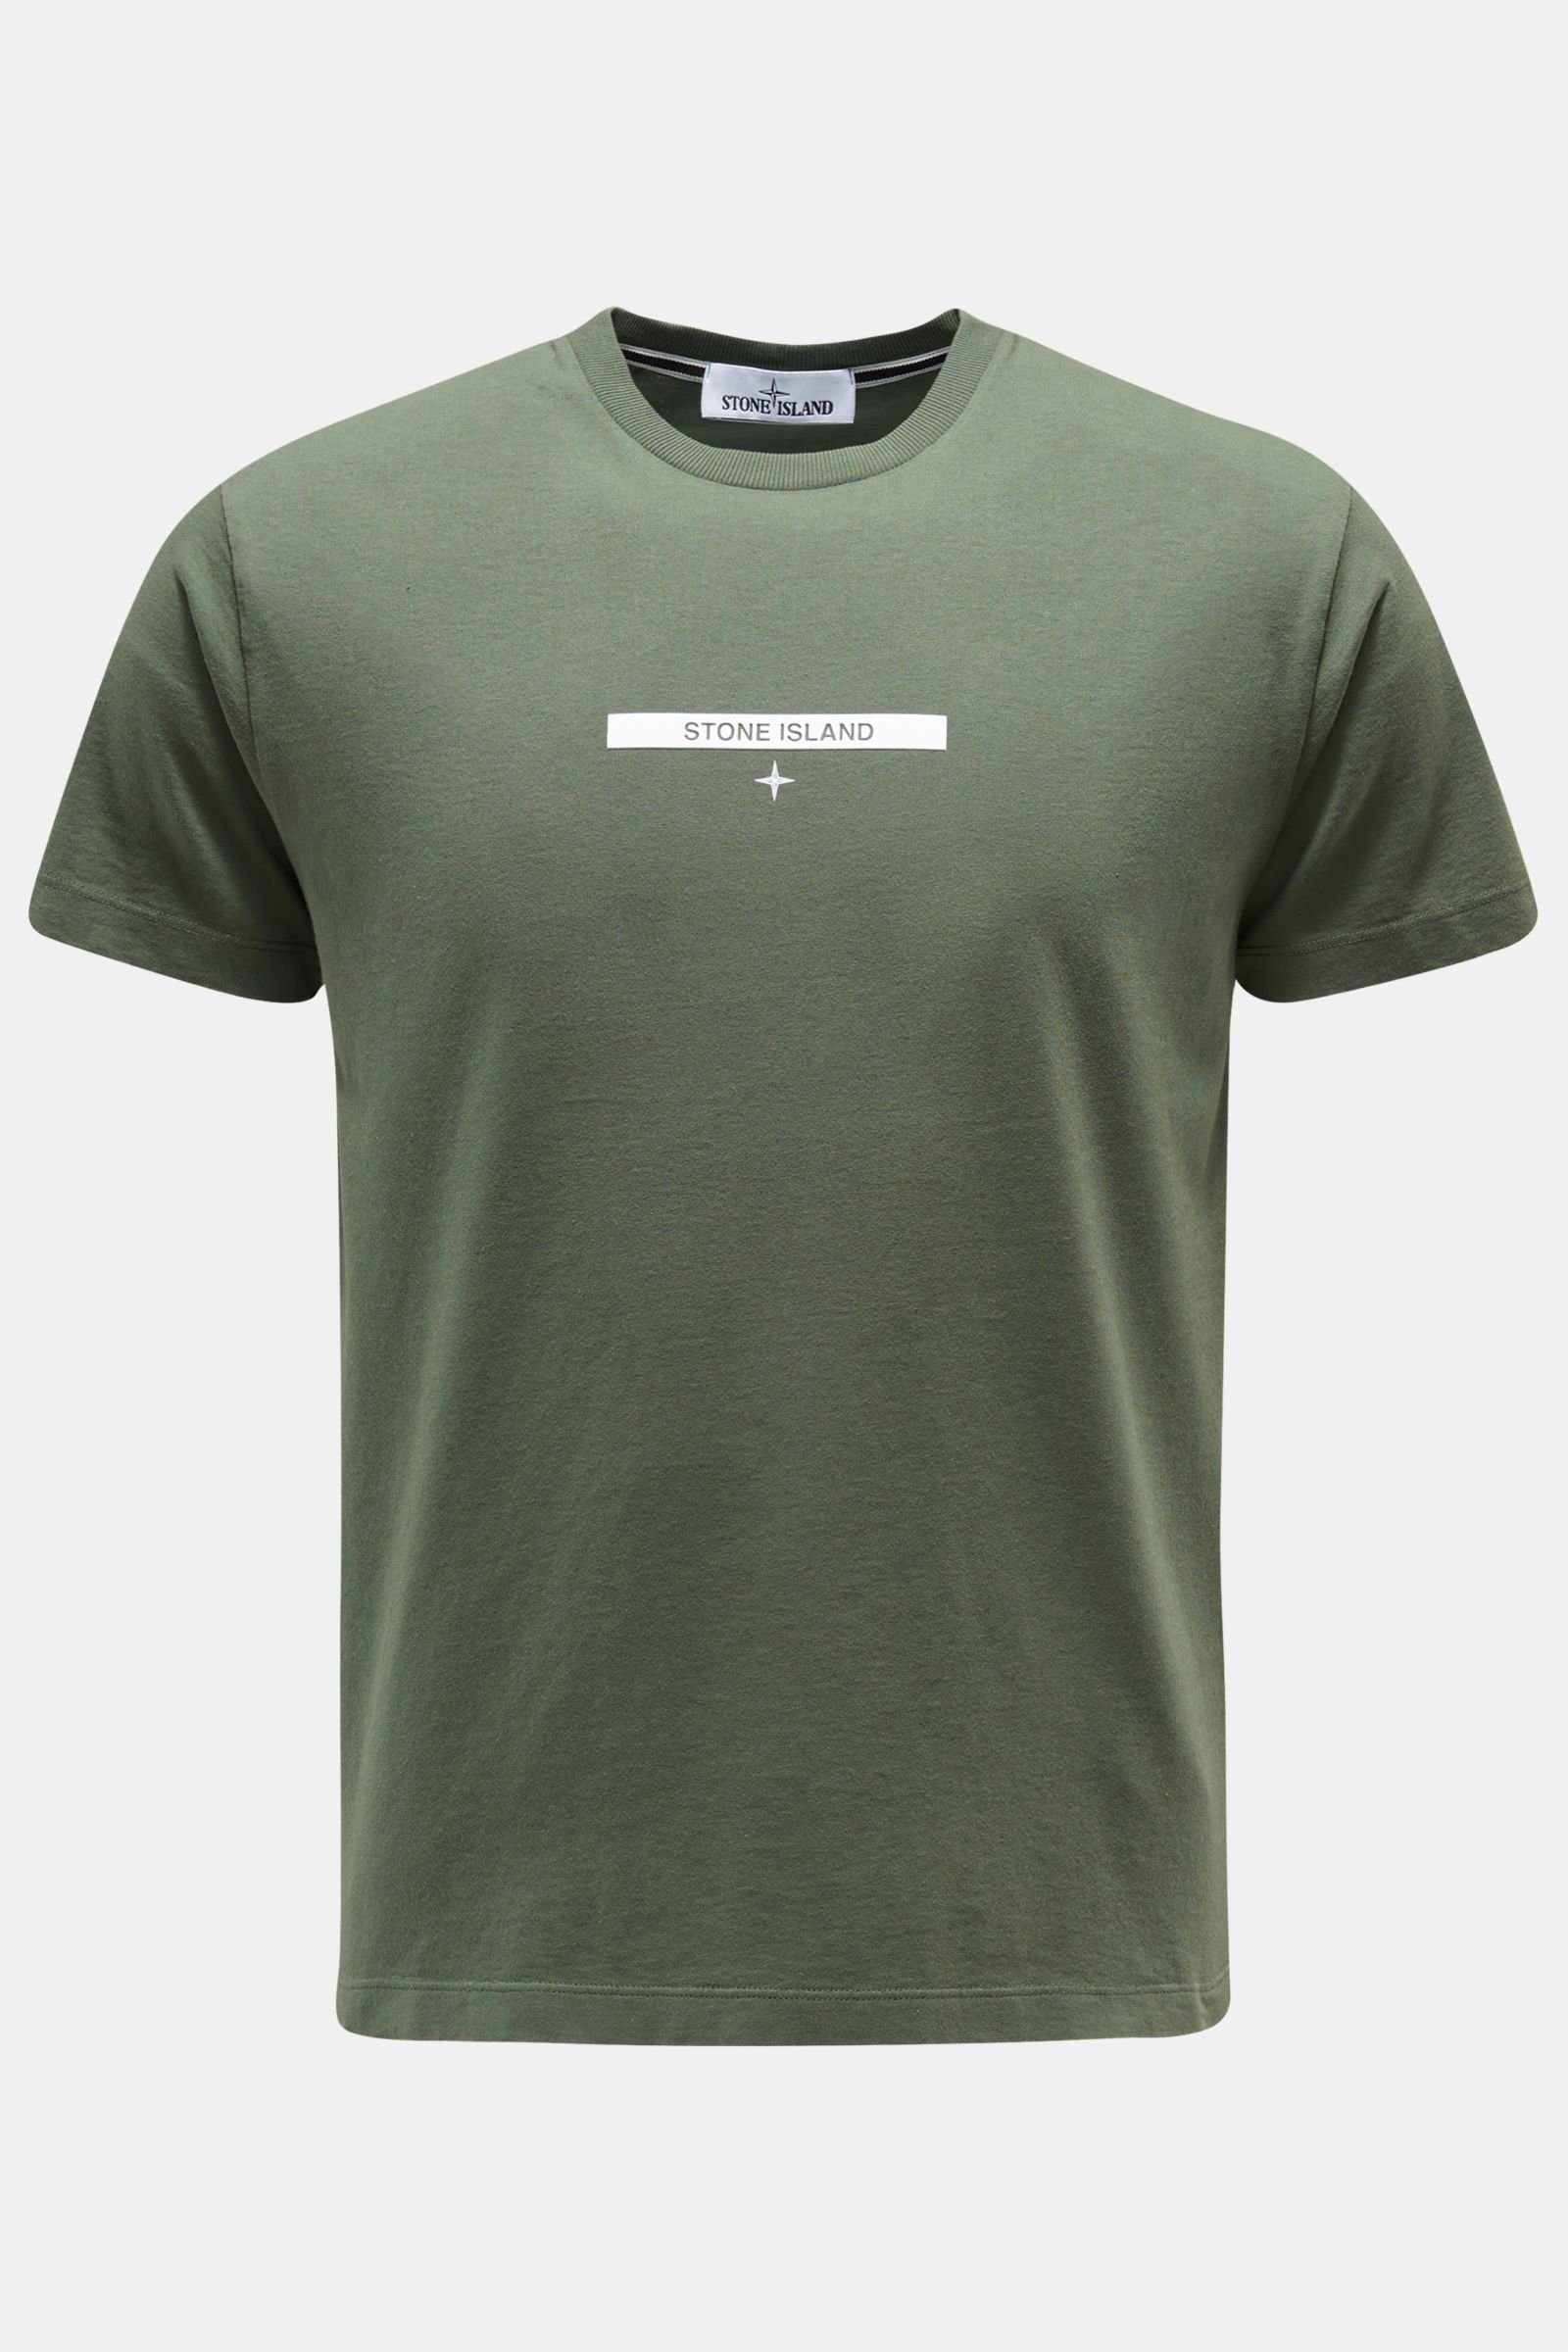 Crew neck T-shirt grey-green